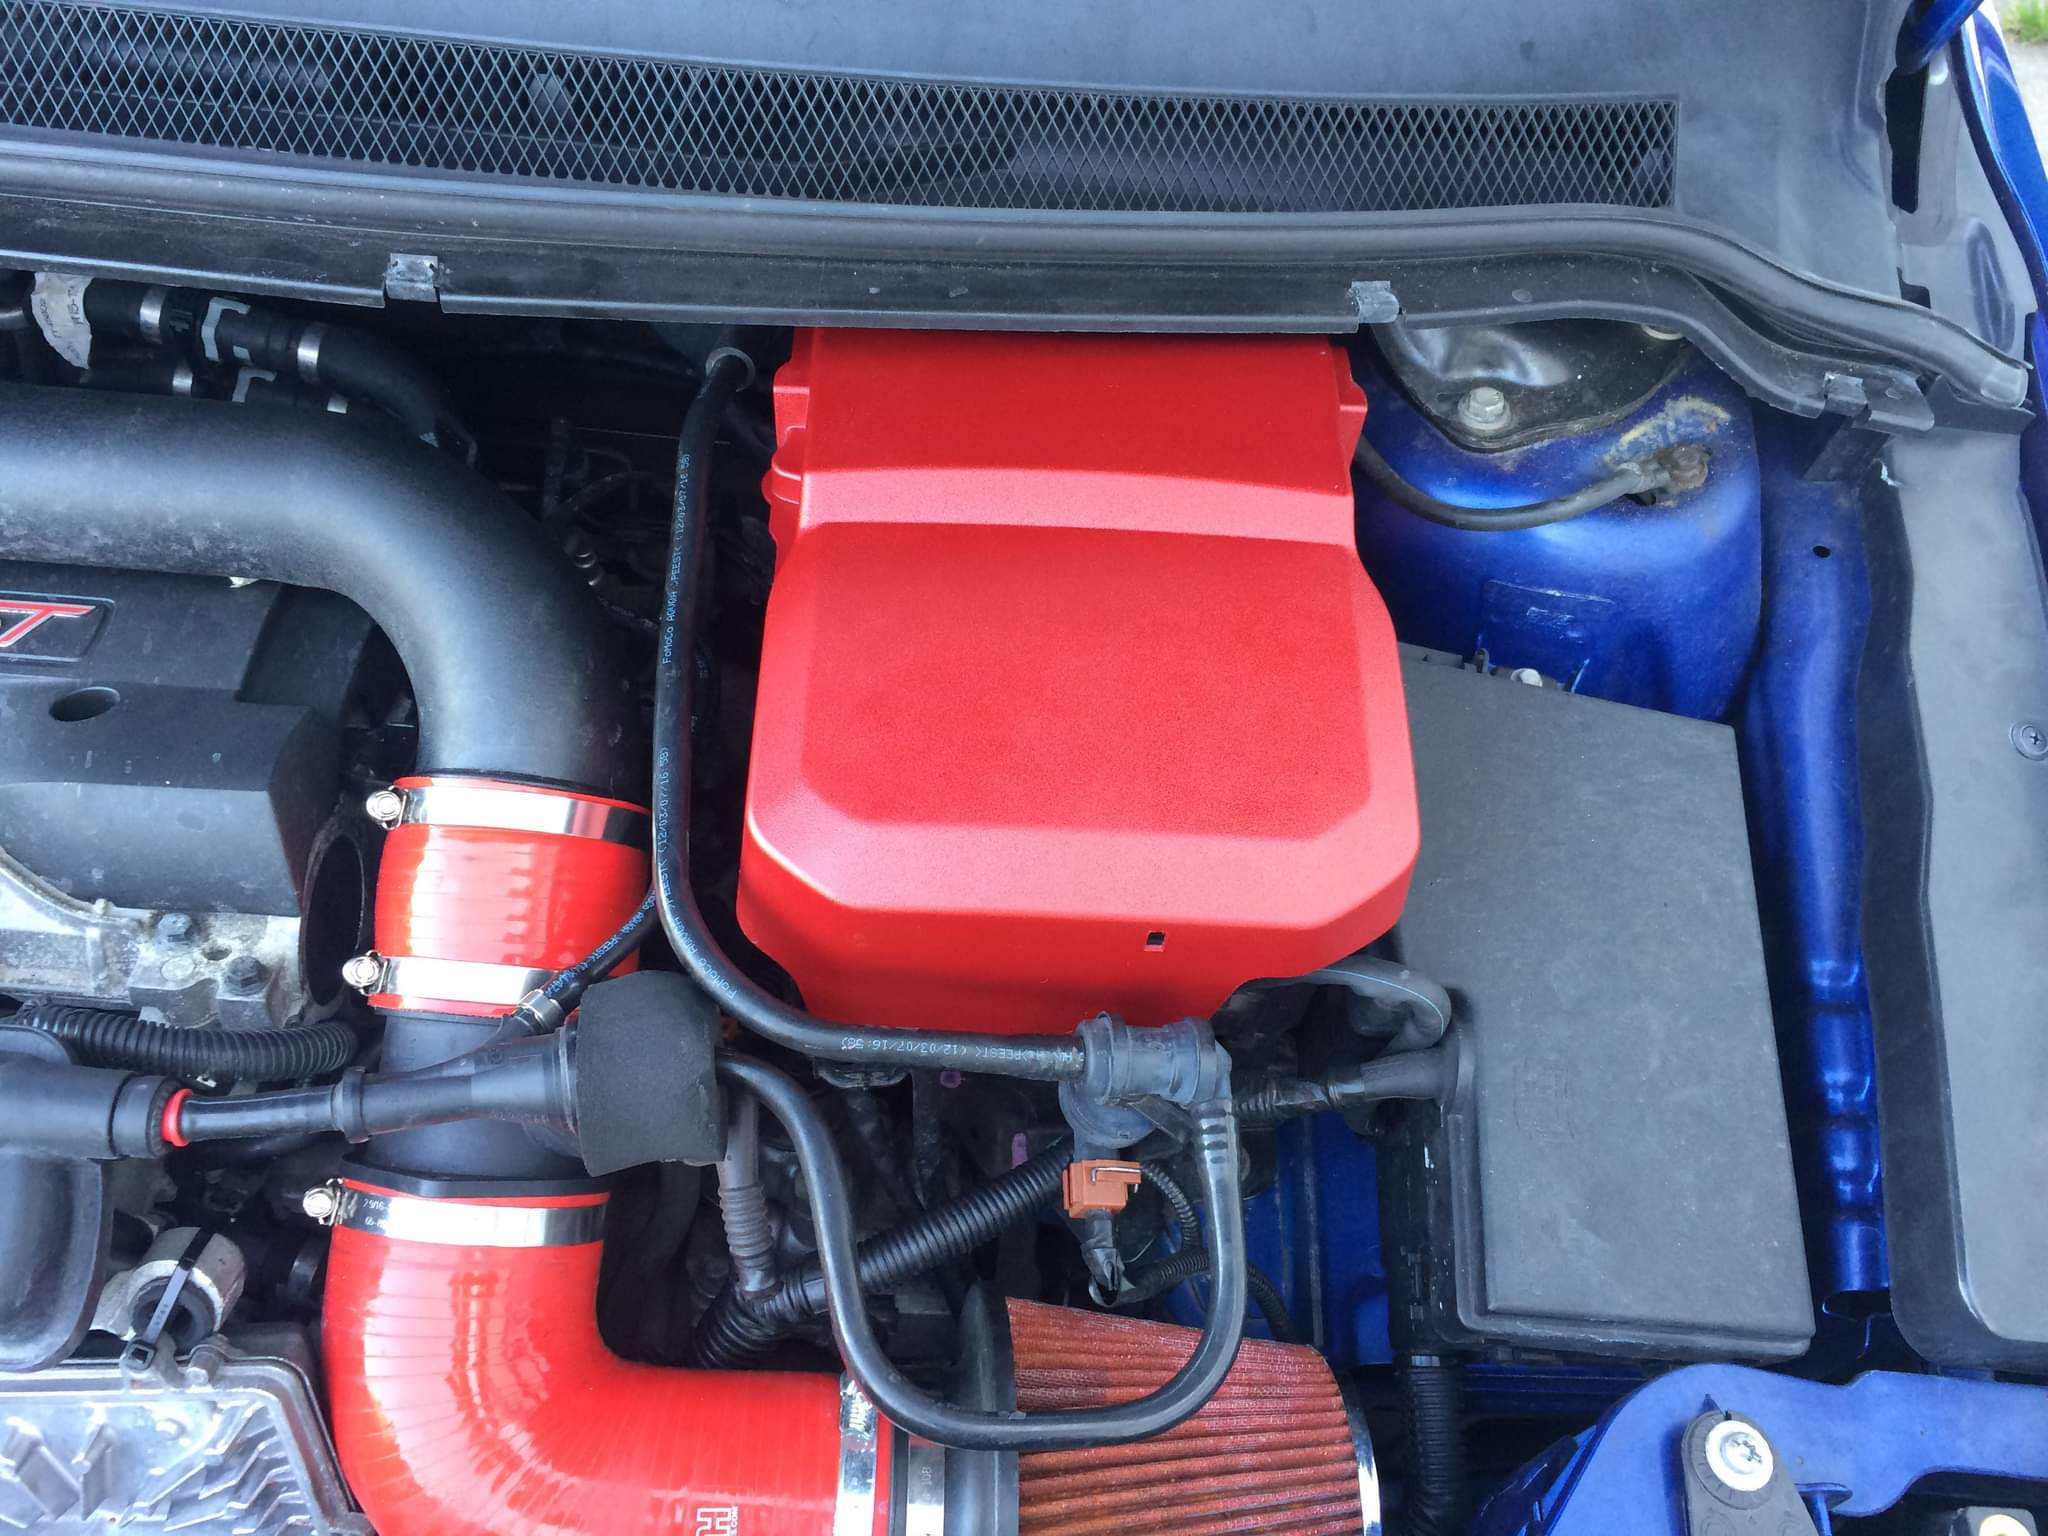 red engine up close